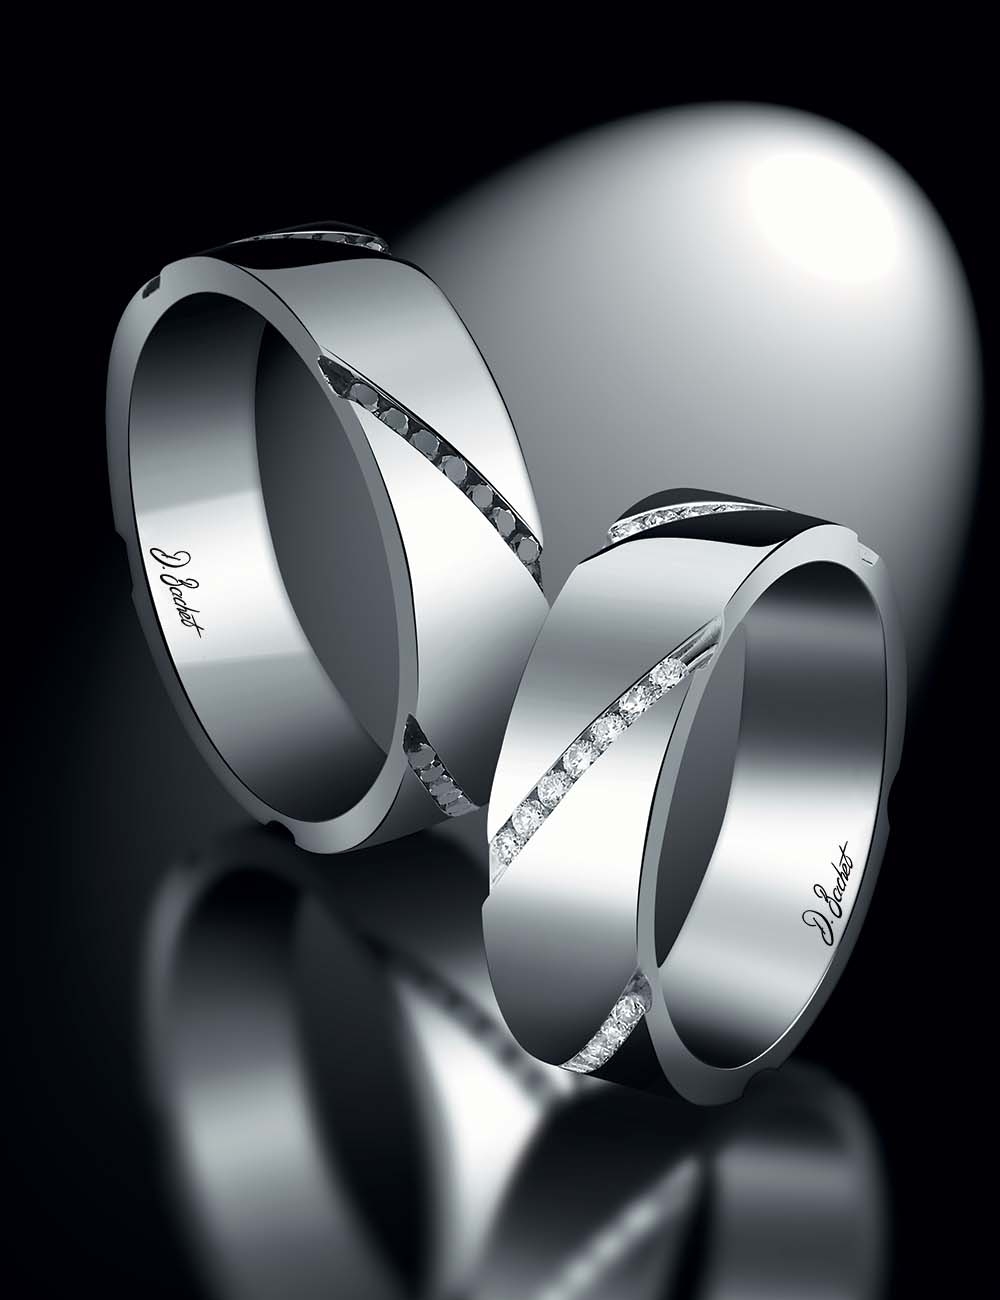 Men's wedding band with black diamonds set diagonally, in platinum, symbolizing refined elegance and lasting love.